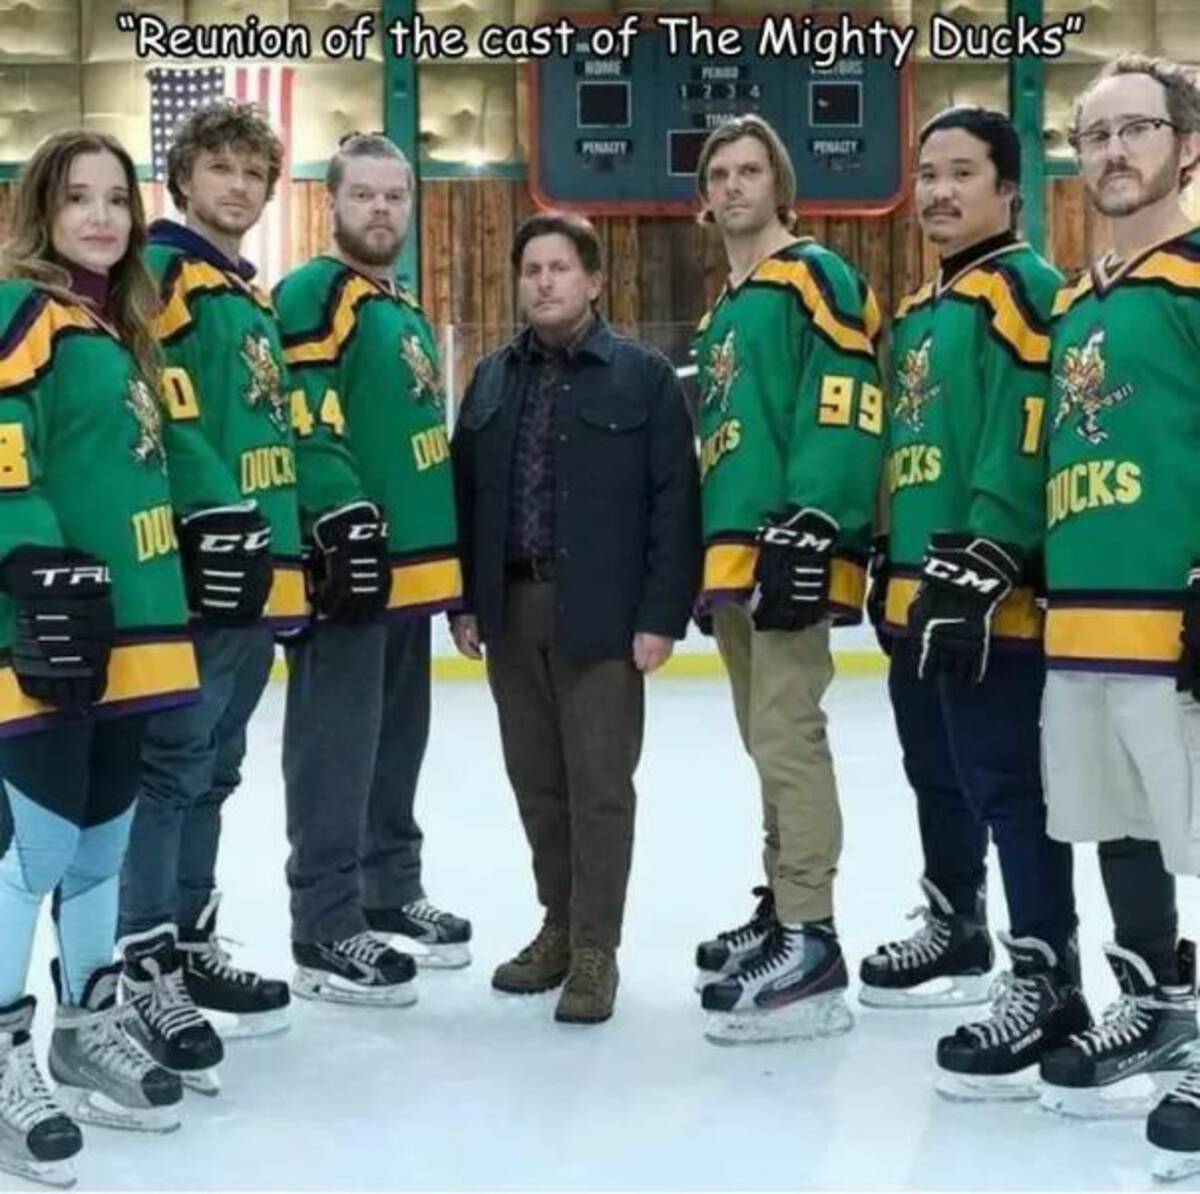 mighty ducks - "Reunion of the cast of The Mighty Ducks" Tr Du Duck Du Penalty Penalty 99 Cks Cm 12 Ucks